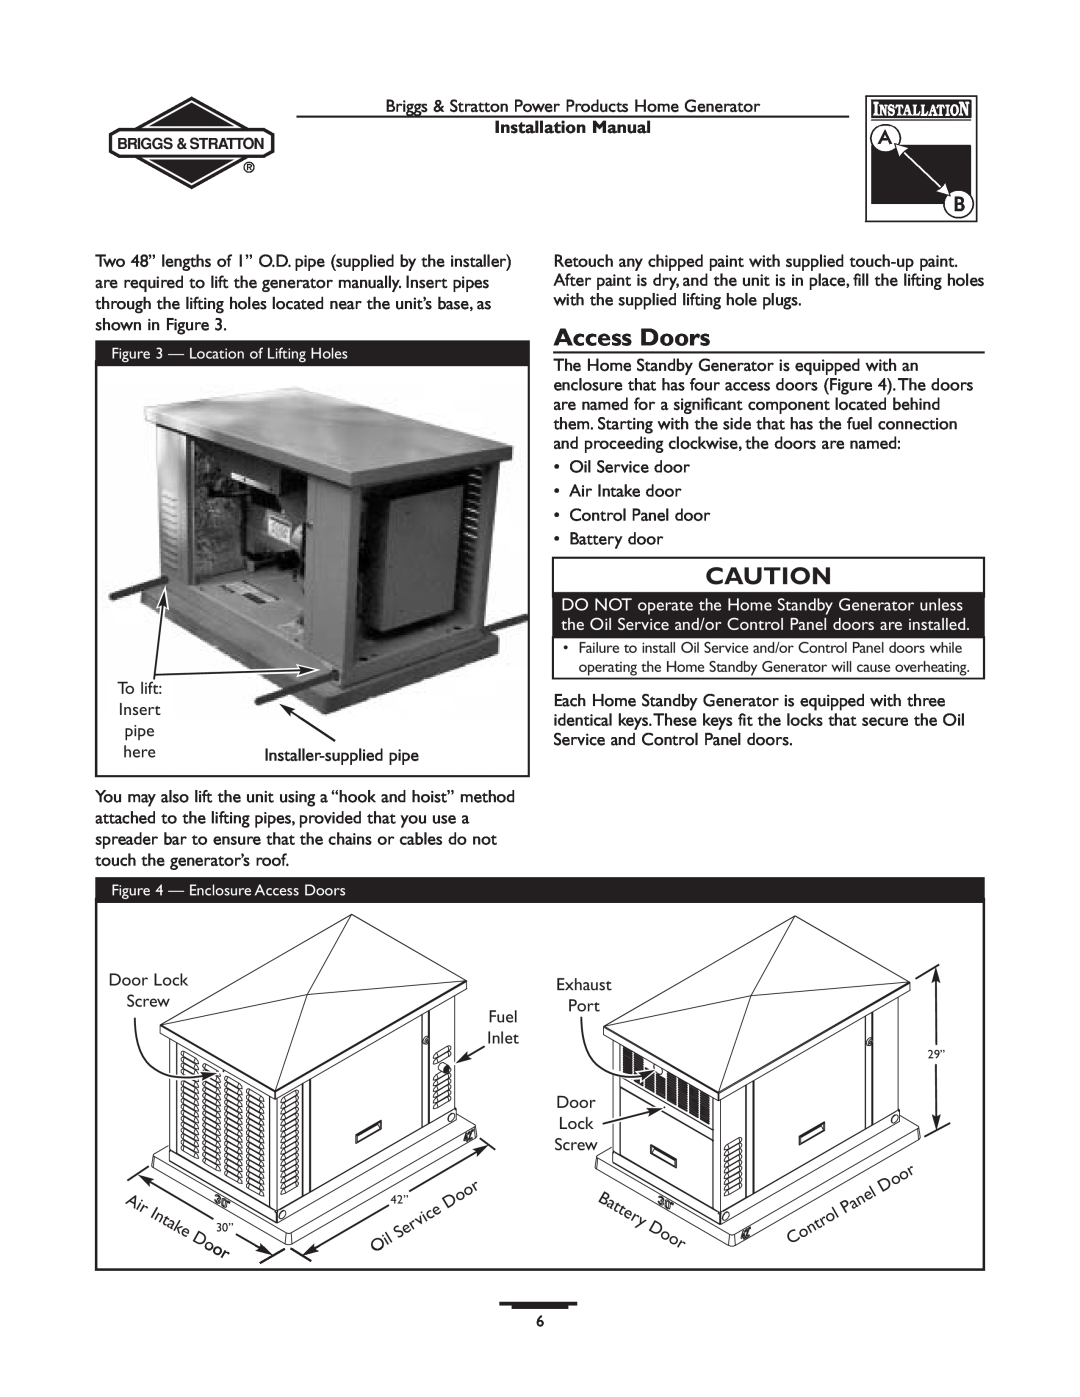 Briggs & Stratton 01938-0, 01815-0 manual Access Doors, Installation Manual 